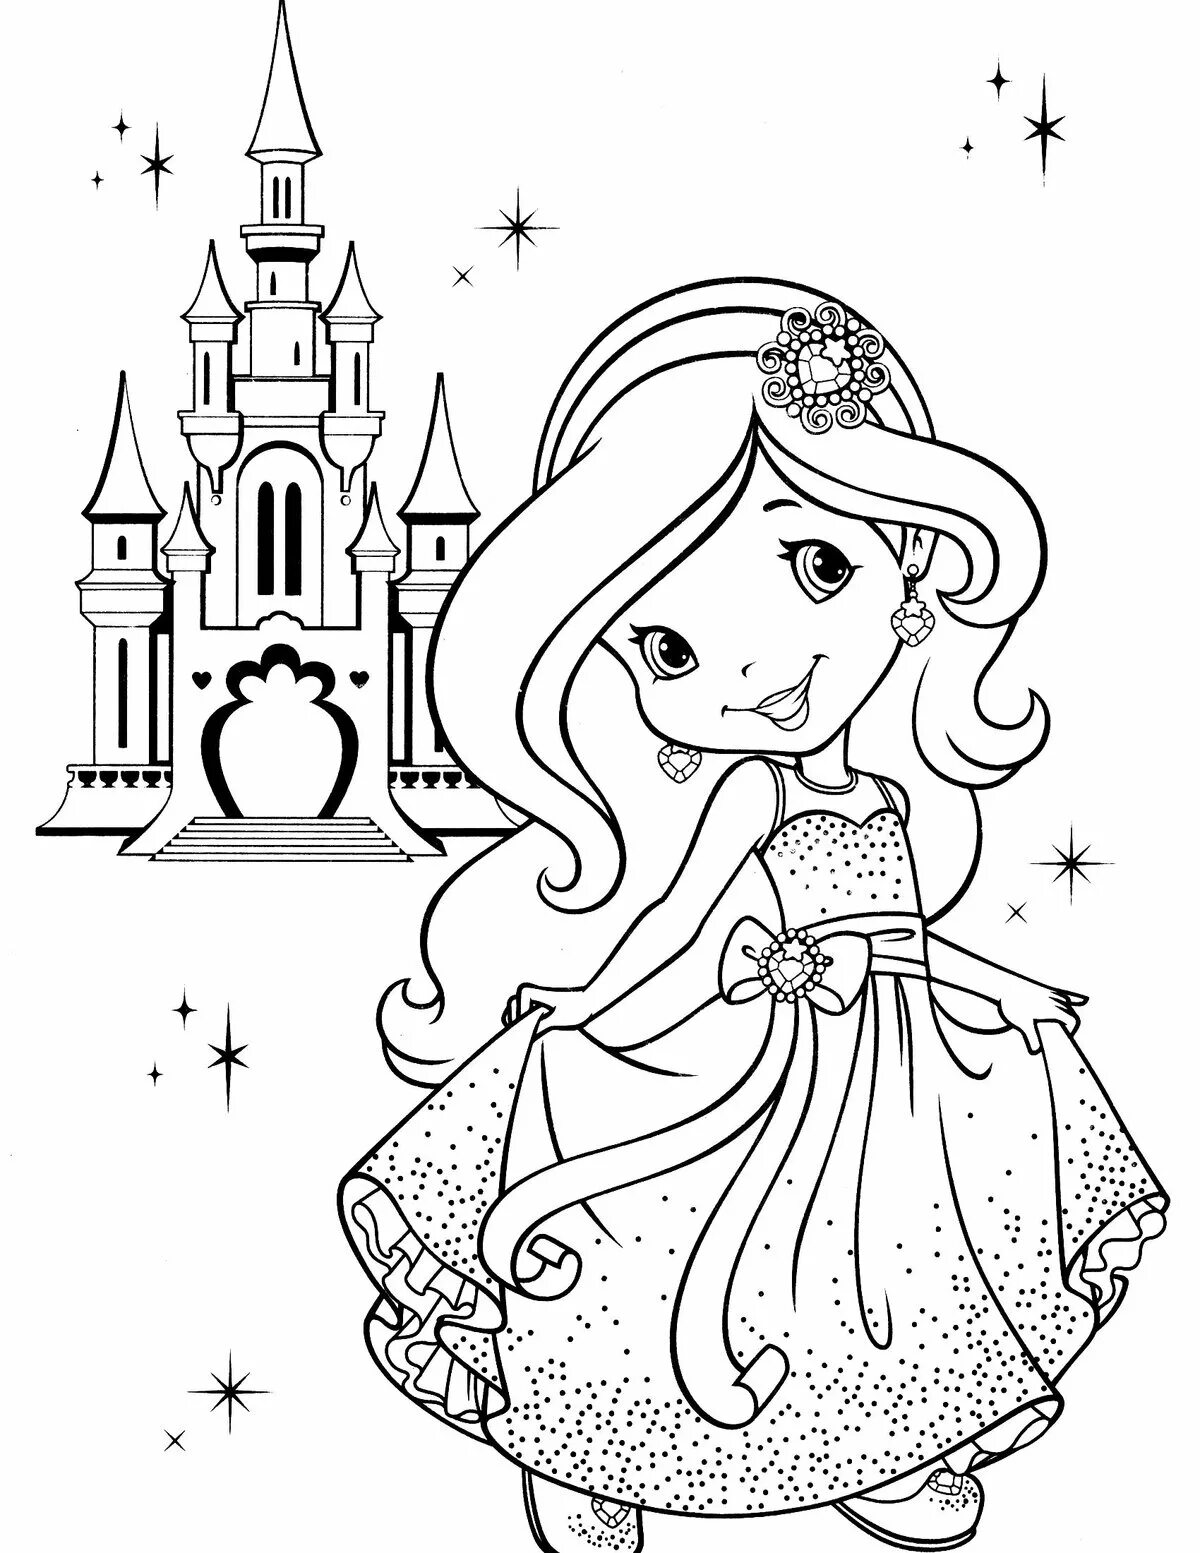 Dreamy coloring include princesses